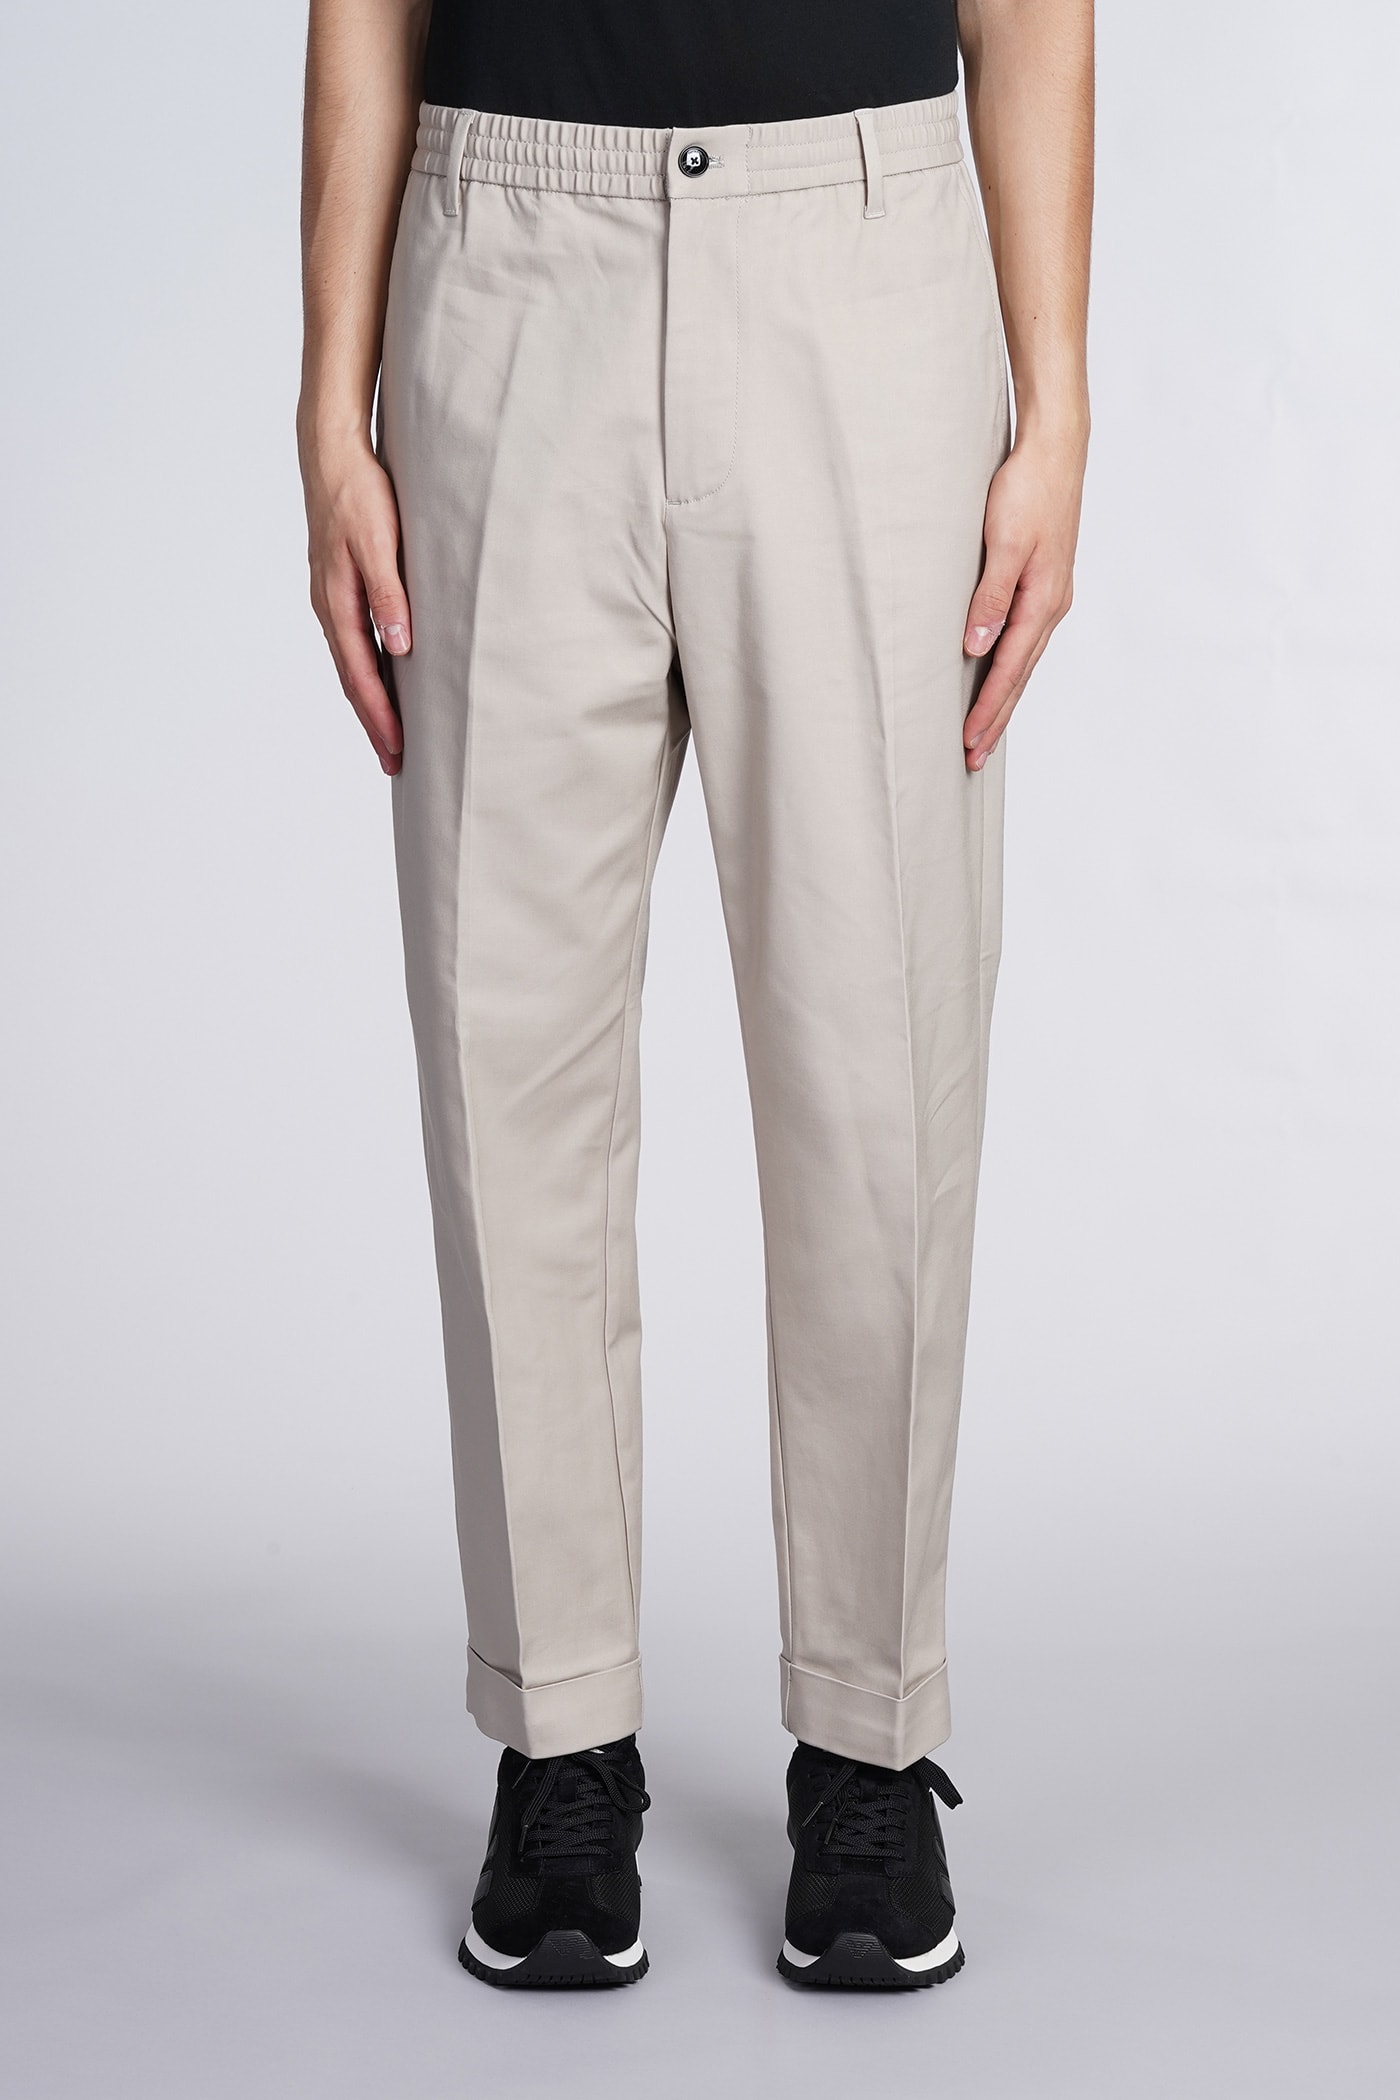 Emporio Armani Pants In Beige Cotton